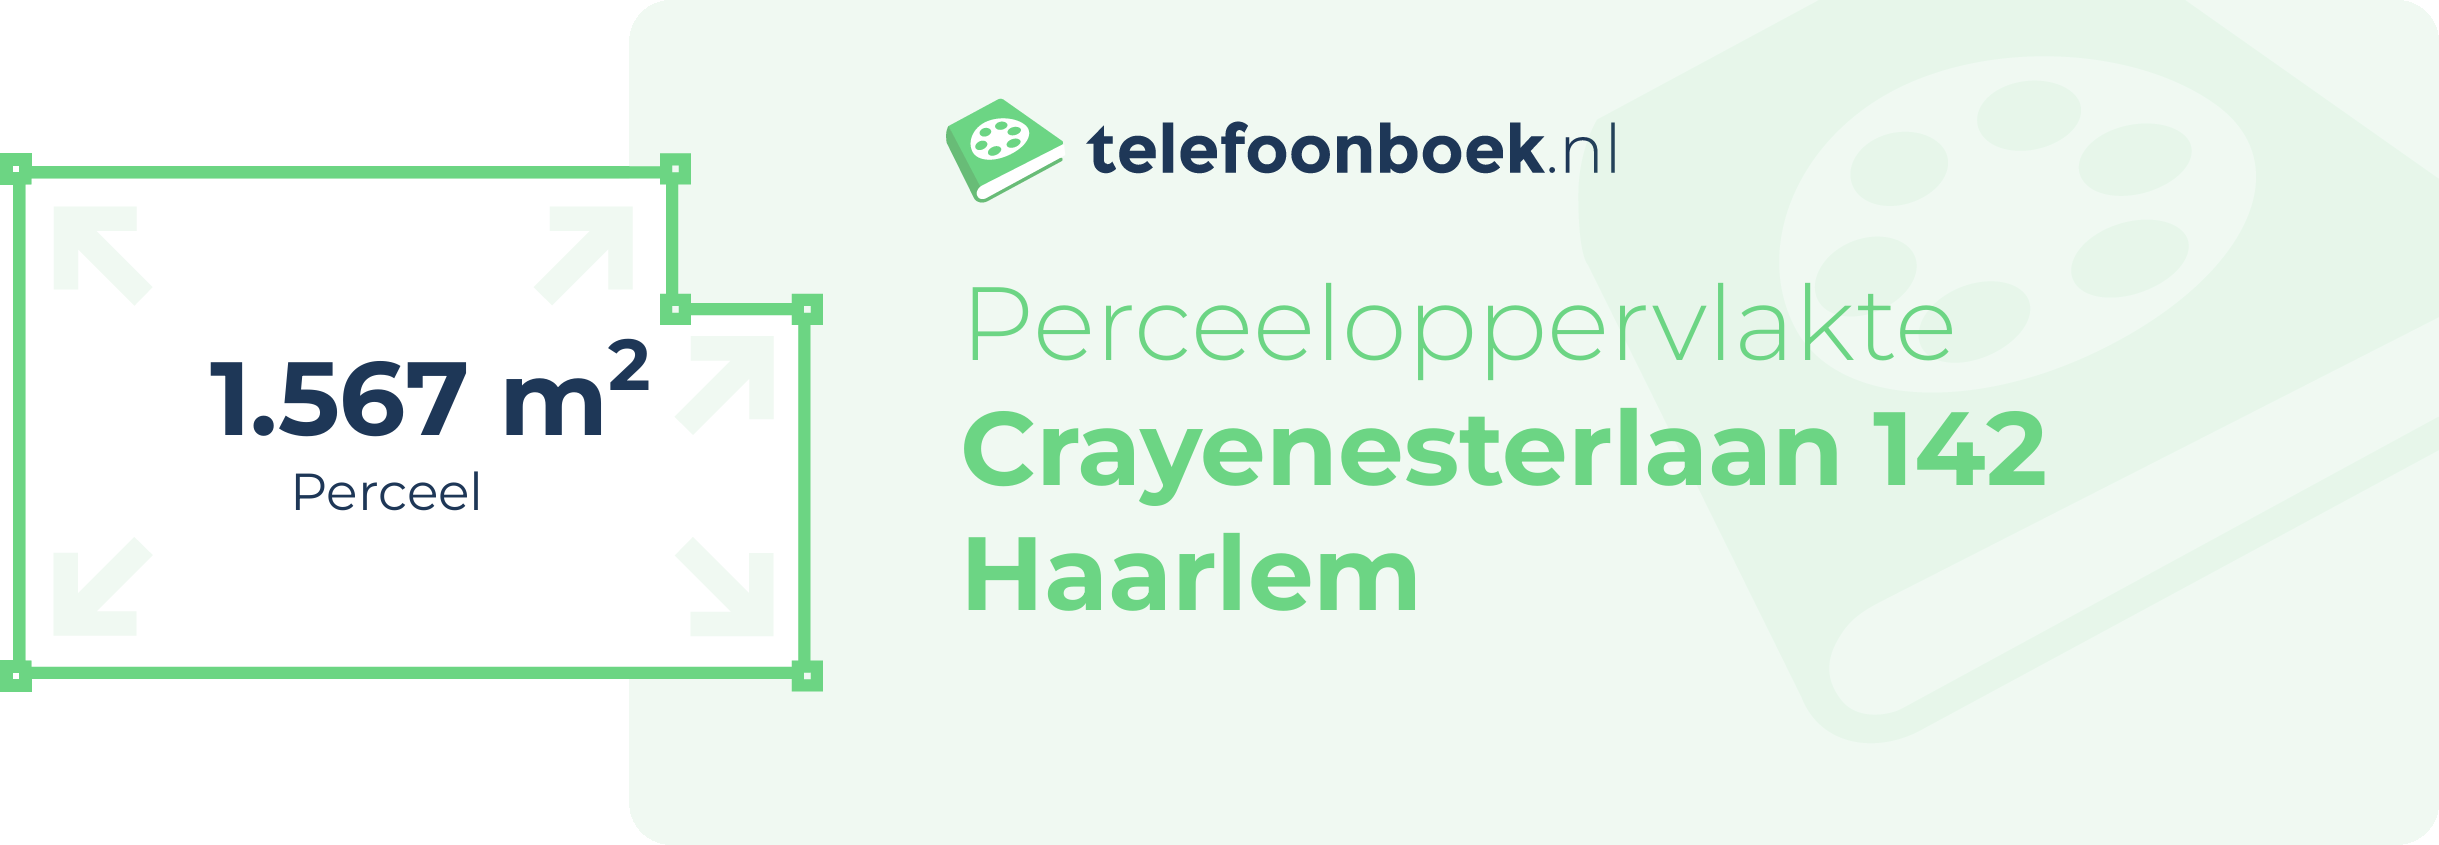 Perceeloppervlakte Crayenesterlaan 142 Haarlem